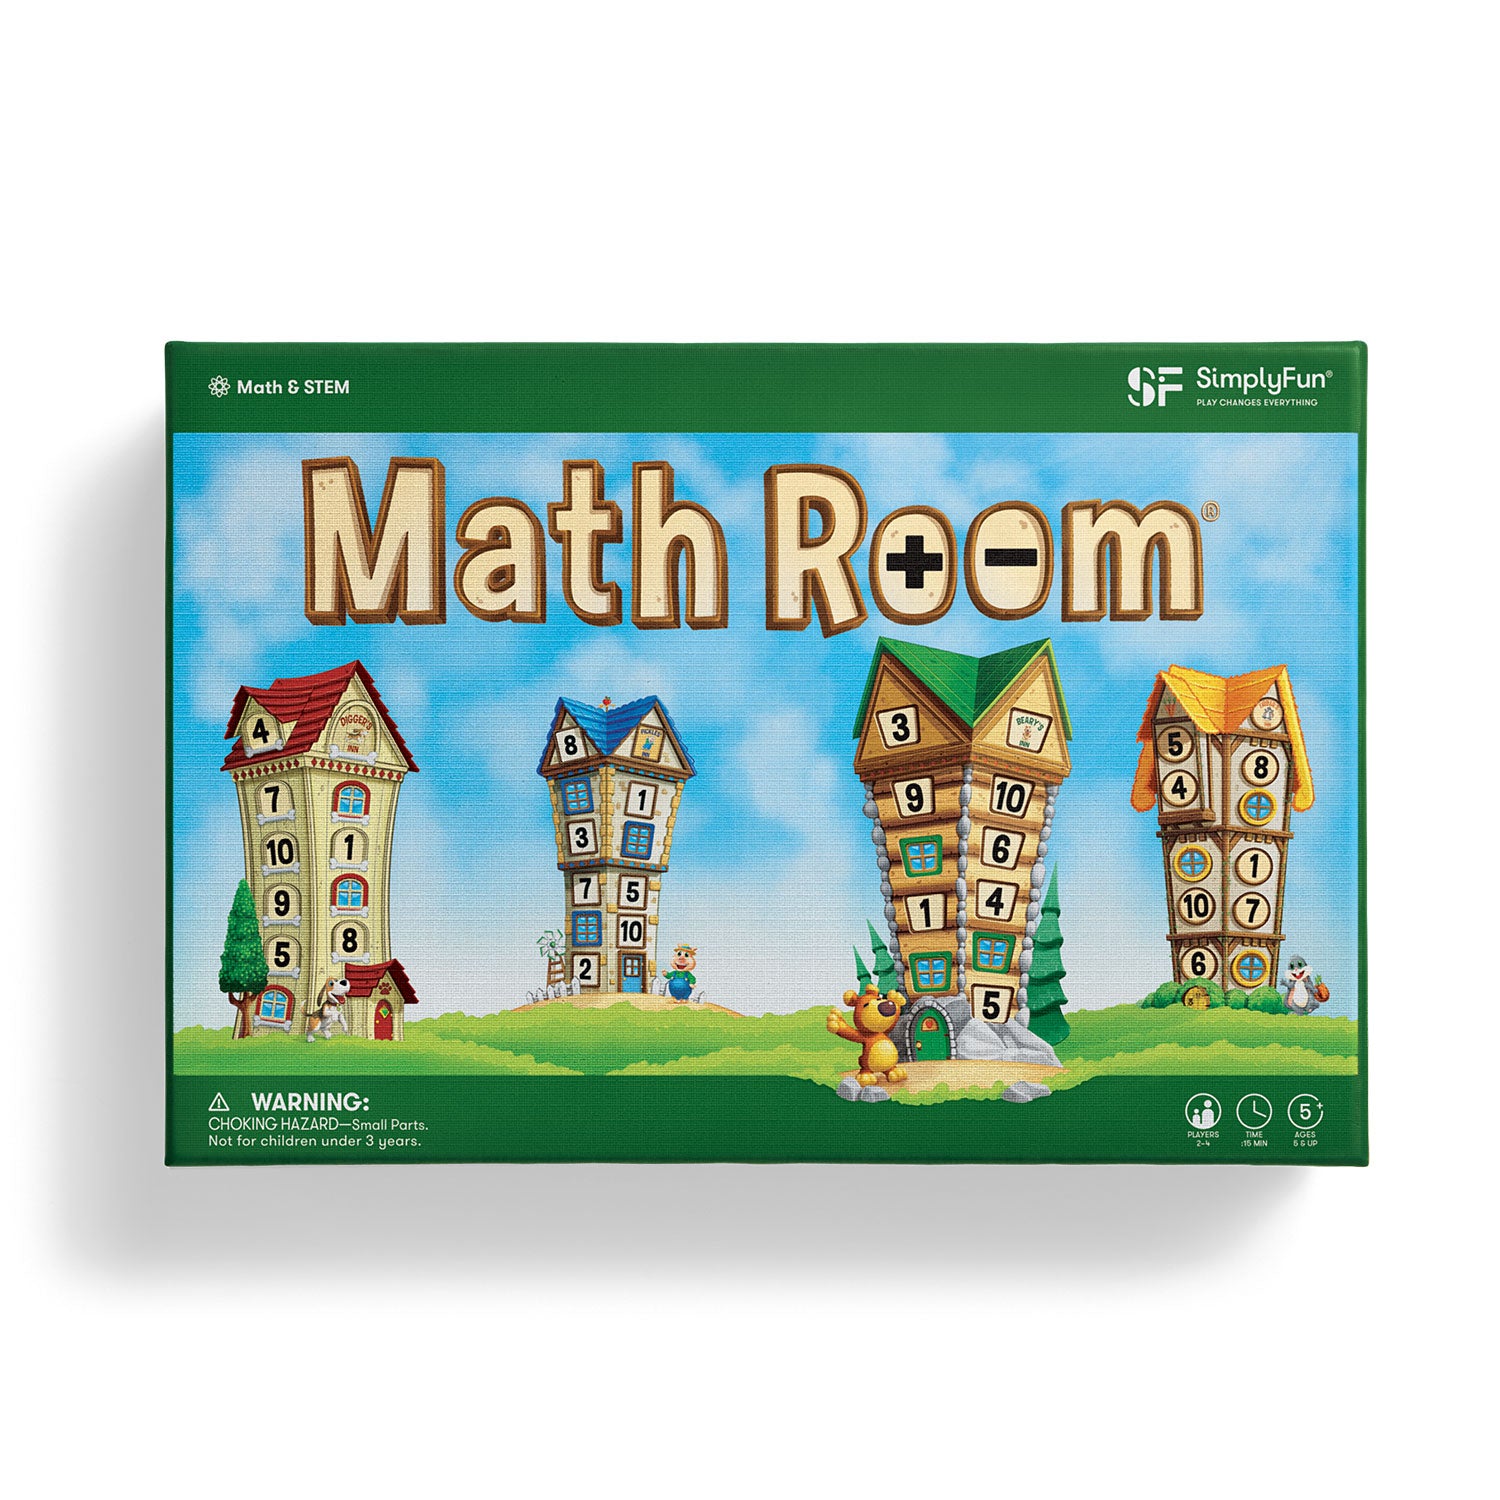 Math Room - Hotel Math Game